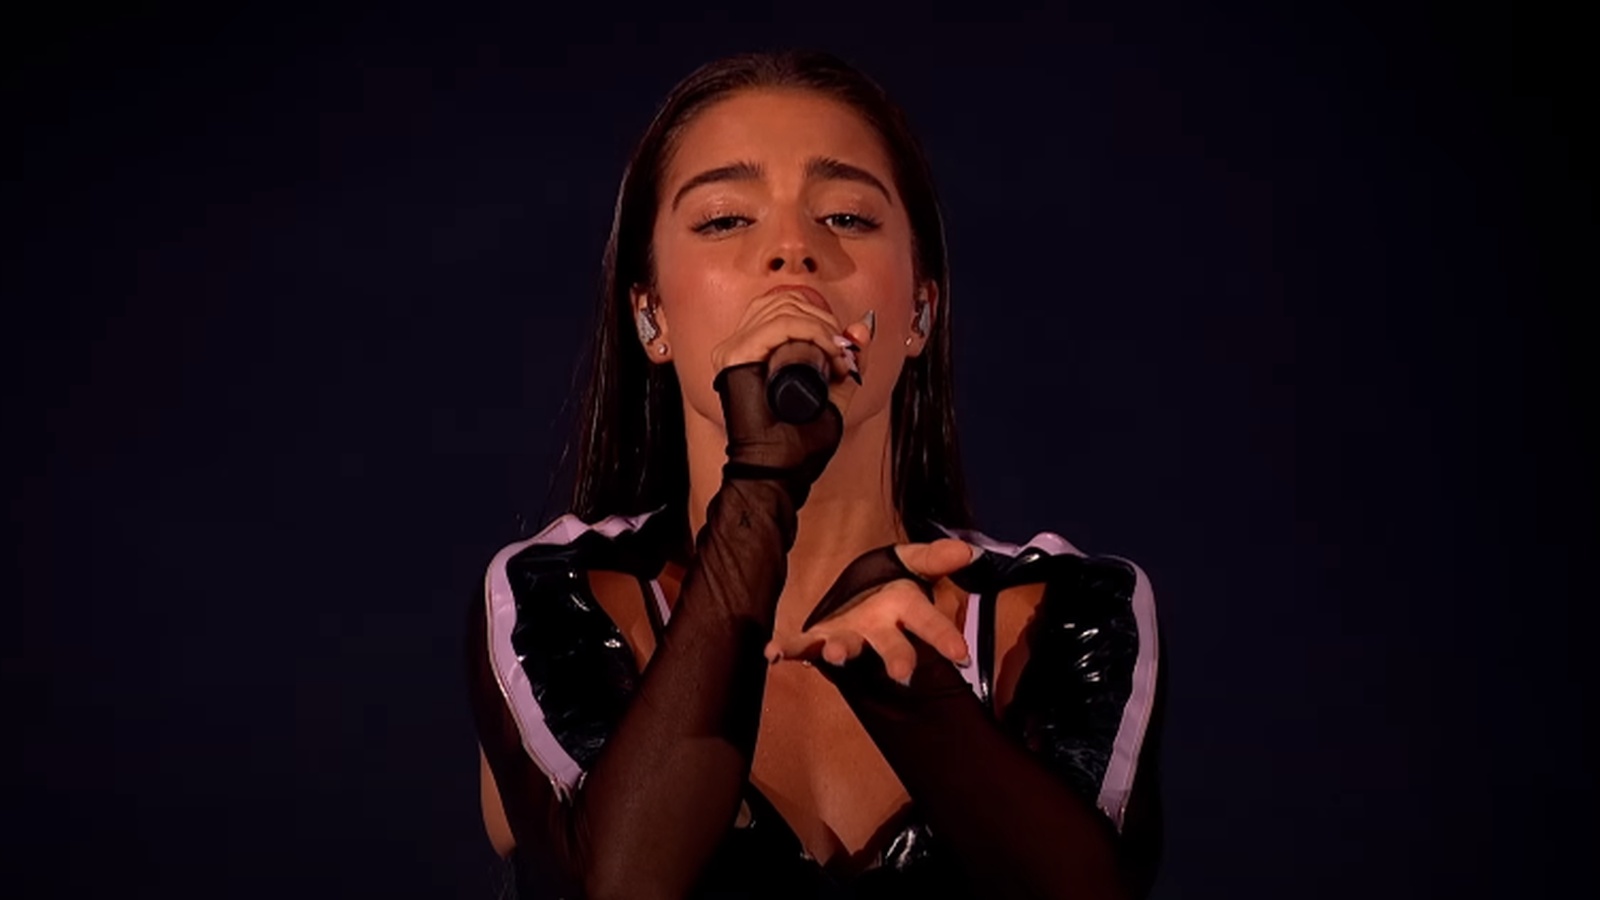 Noa Kirel performing â€œUnicorn.â€� Screenshot from Eurovison official video